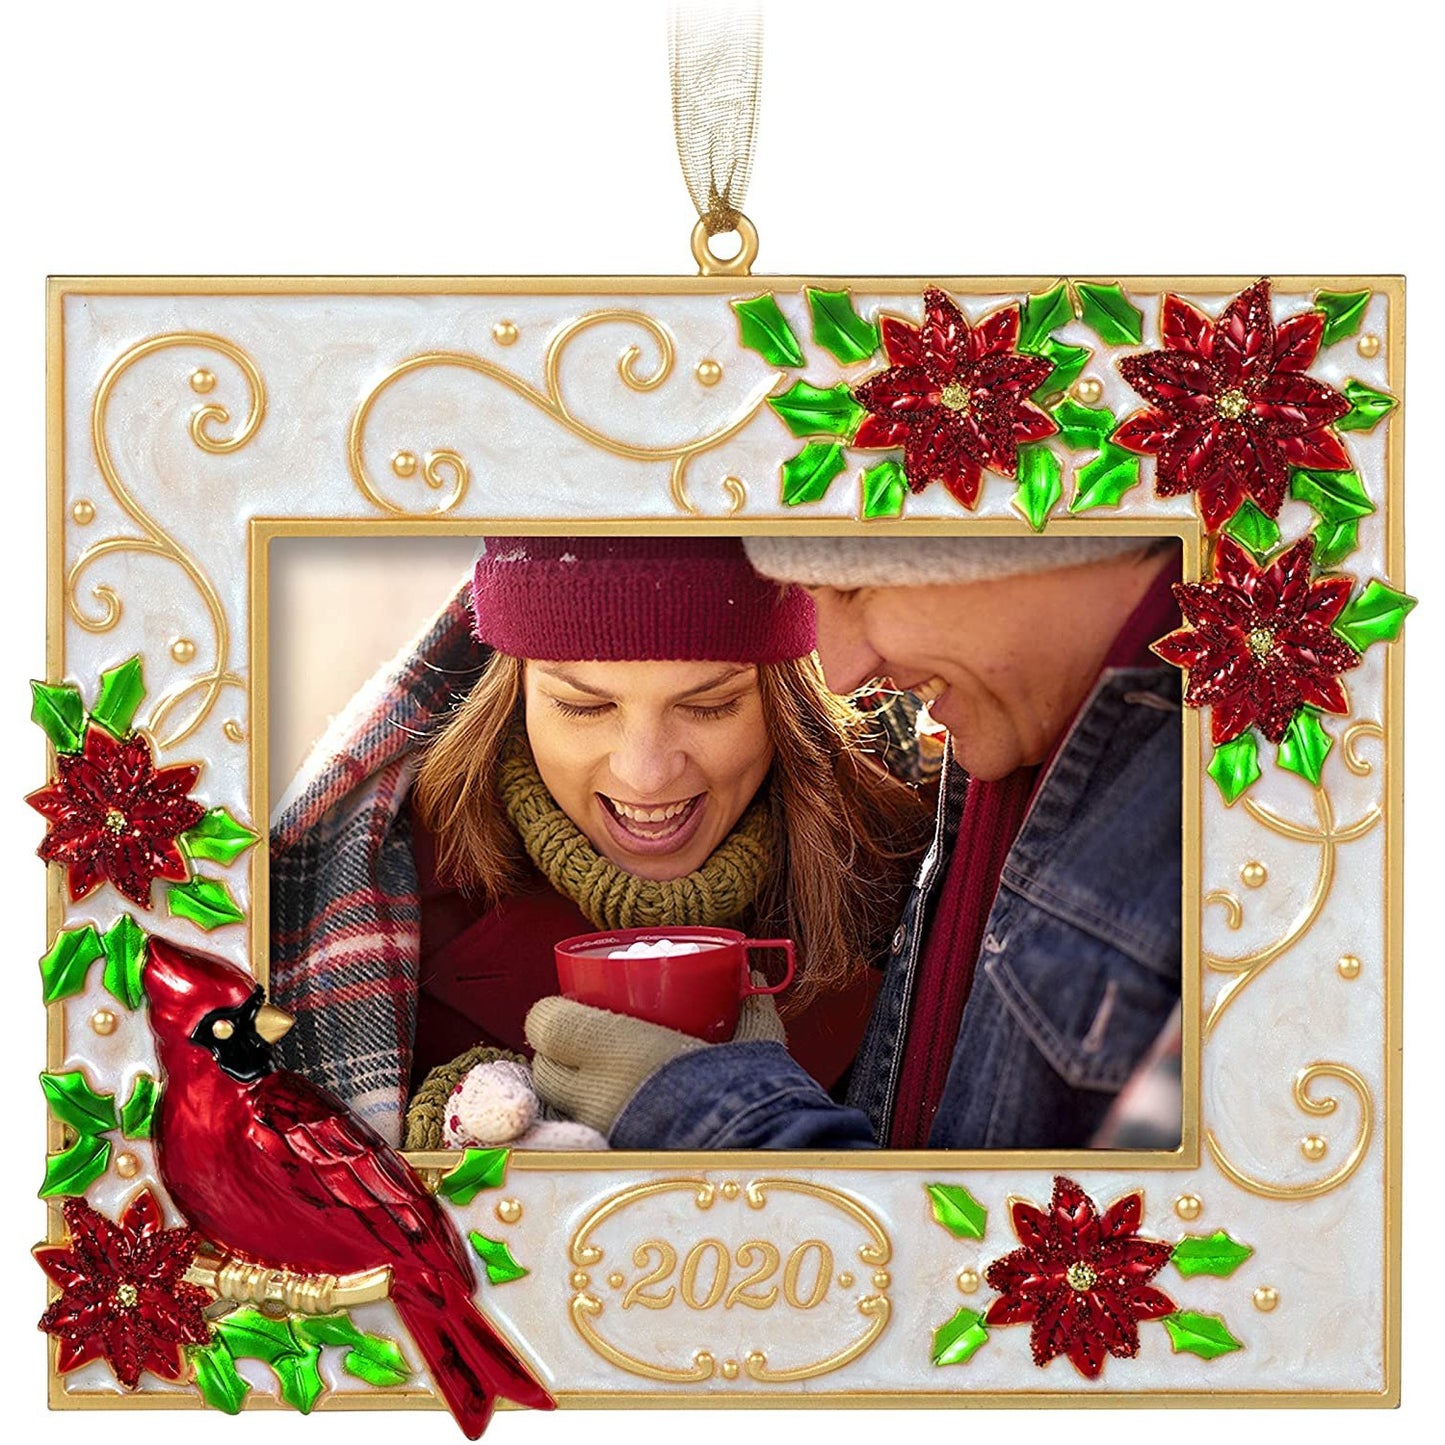 Hallmark Keepsake Christmas Ornament 2020 Year-Dated, Deck the Halls Poinsettias and Cardinal Photo Frame, Metal